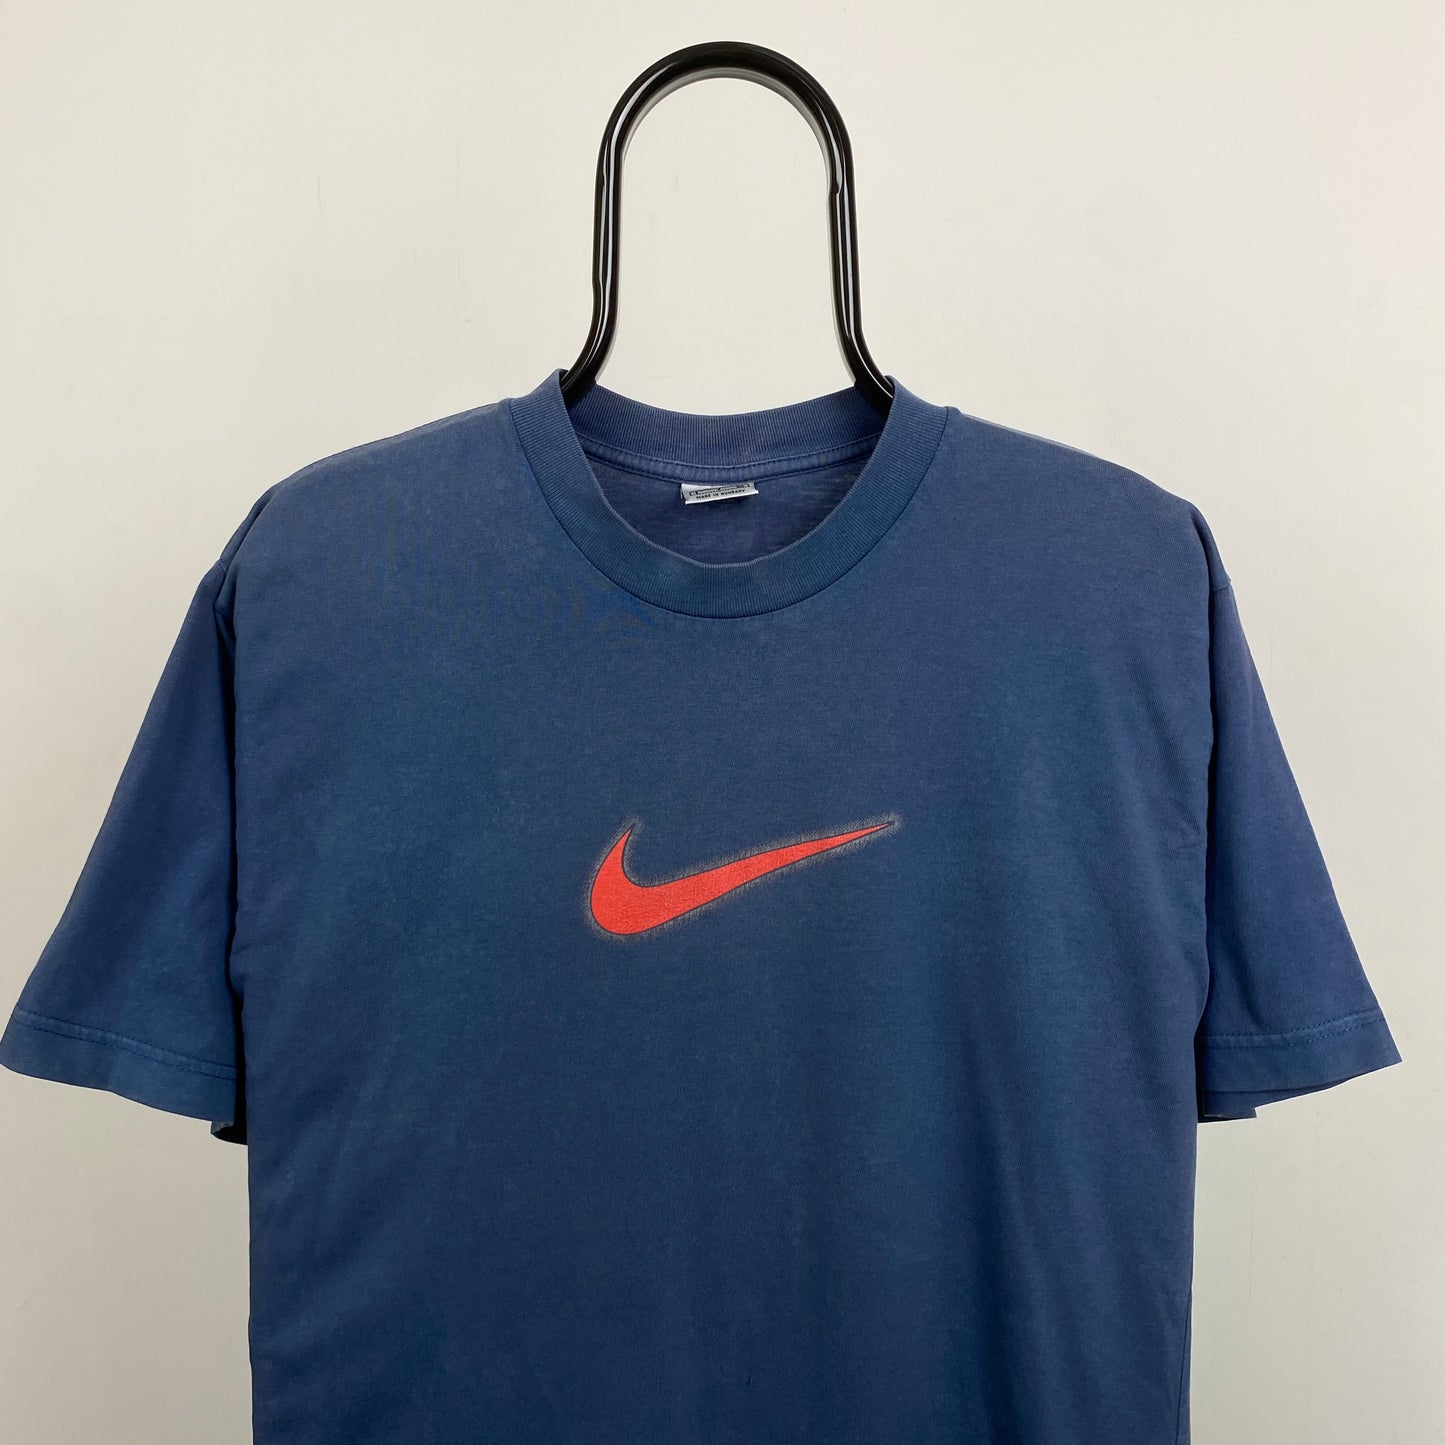 90s Nike Swirl T-Shirt Blue Small